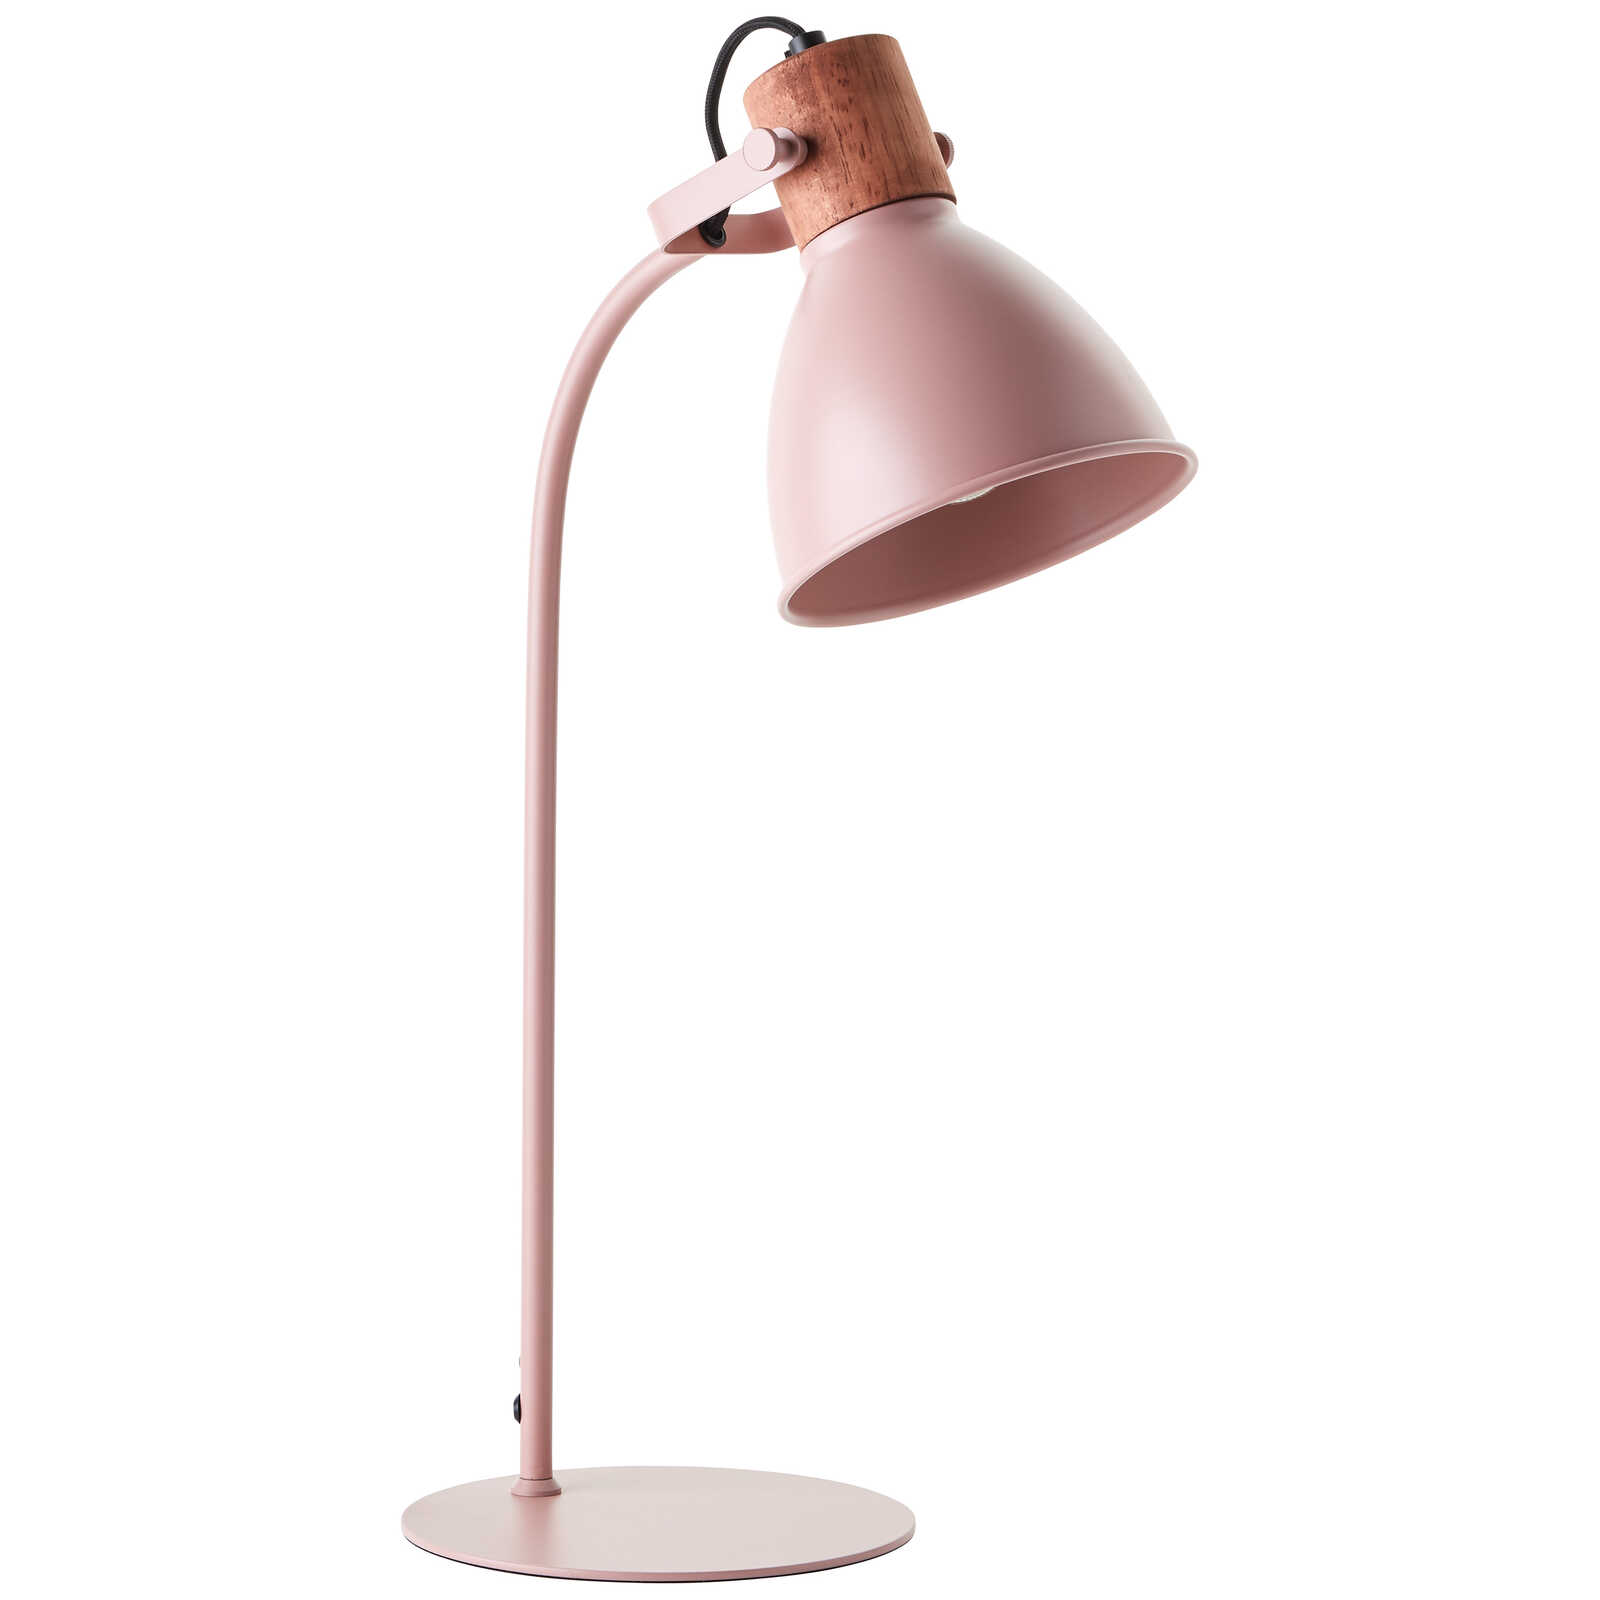             Wooden table lamp - Franziska 1 - Pink
        